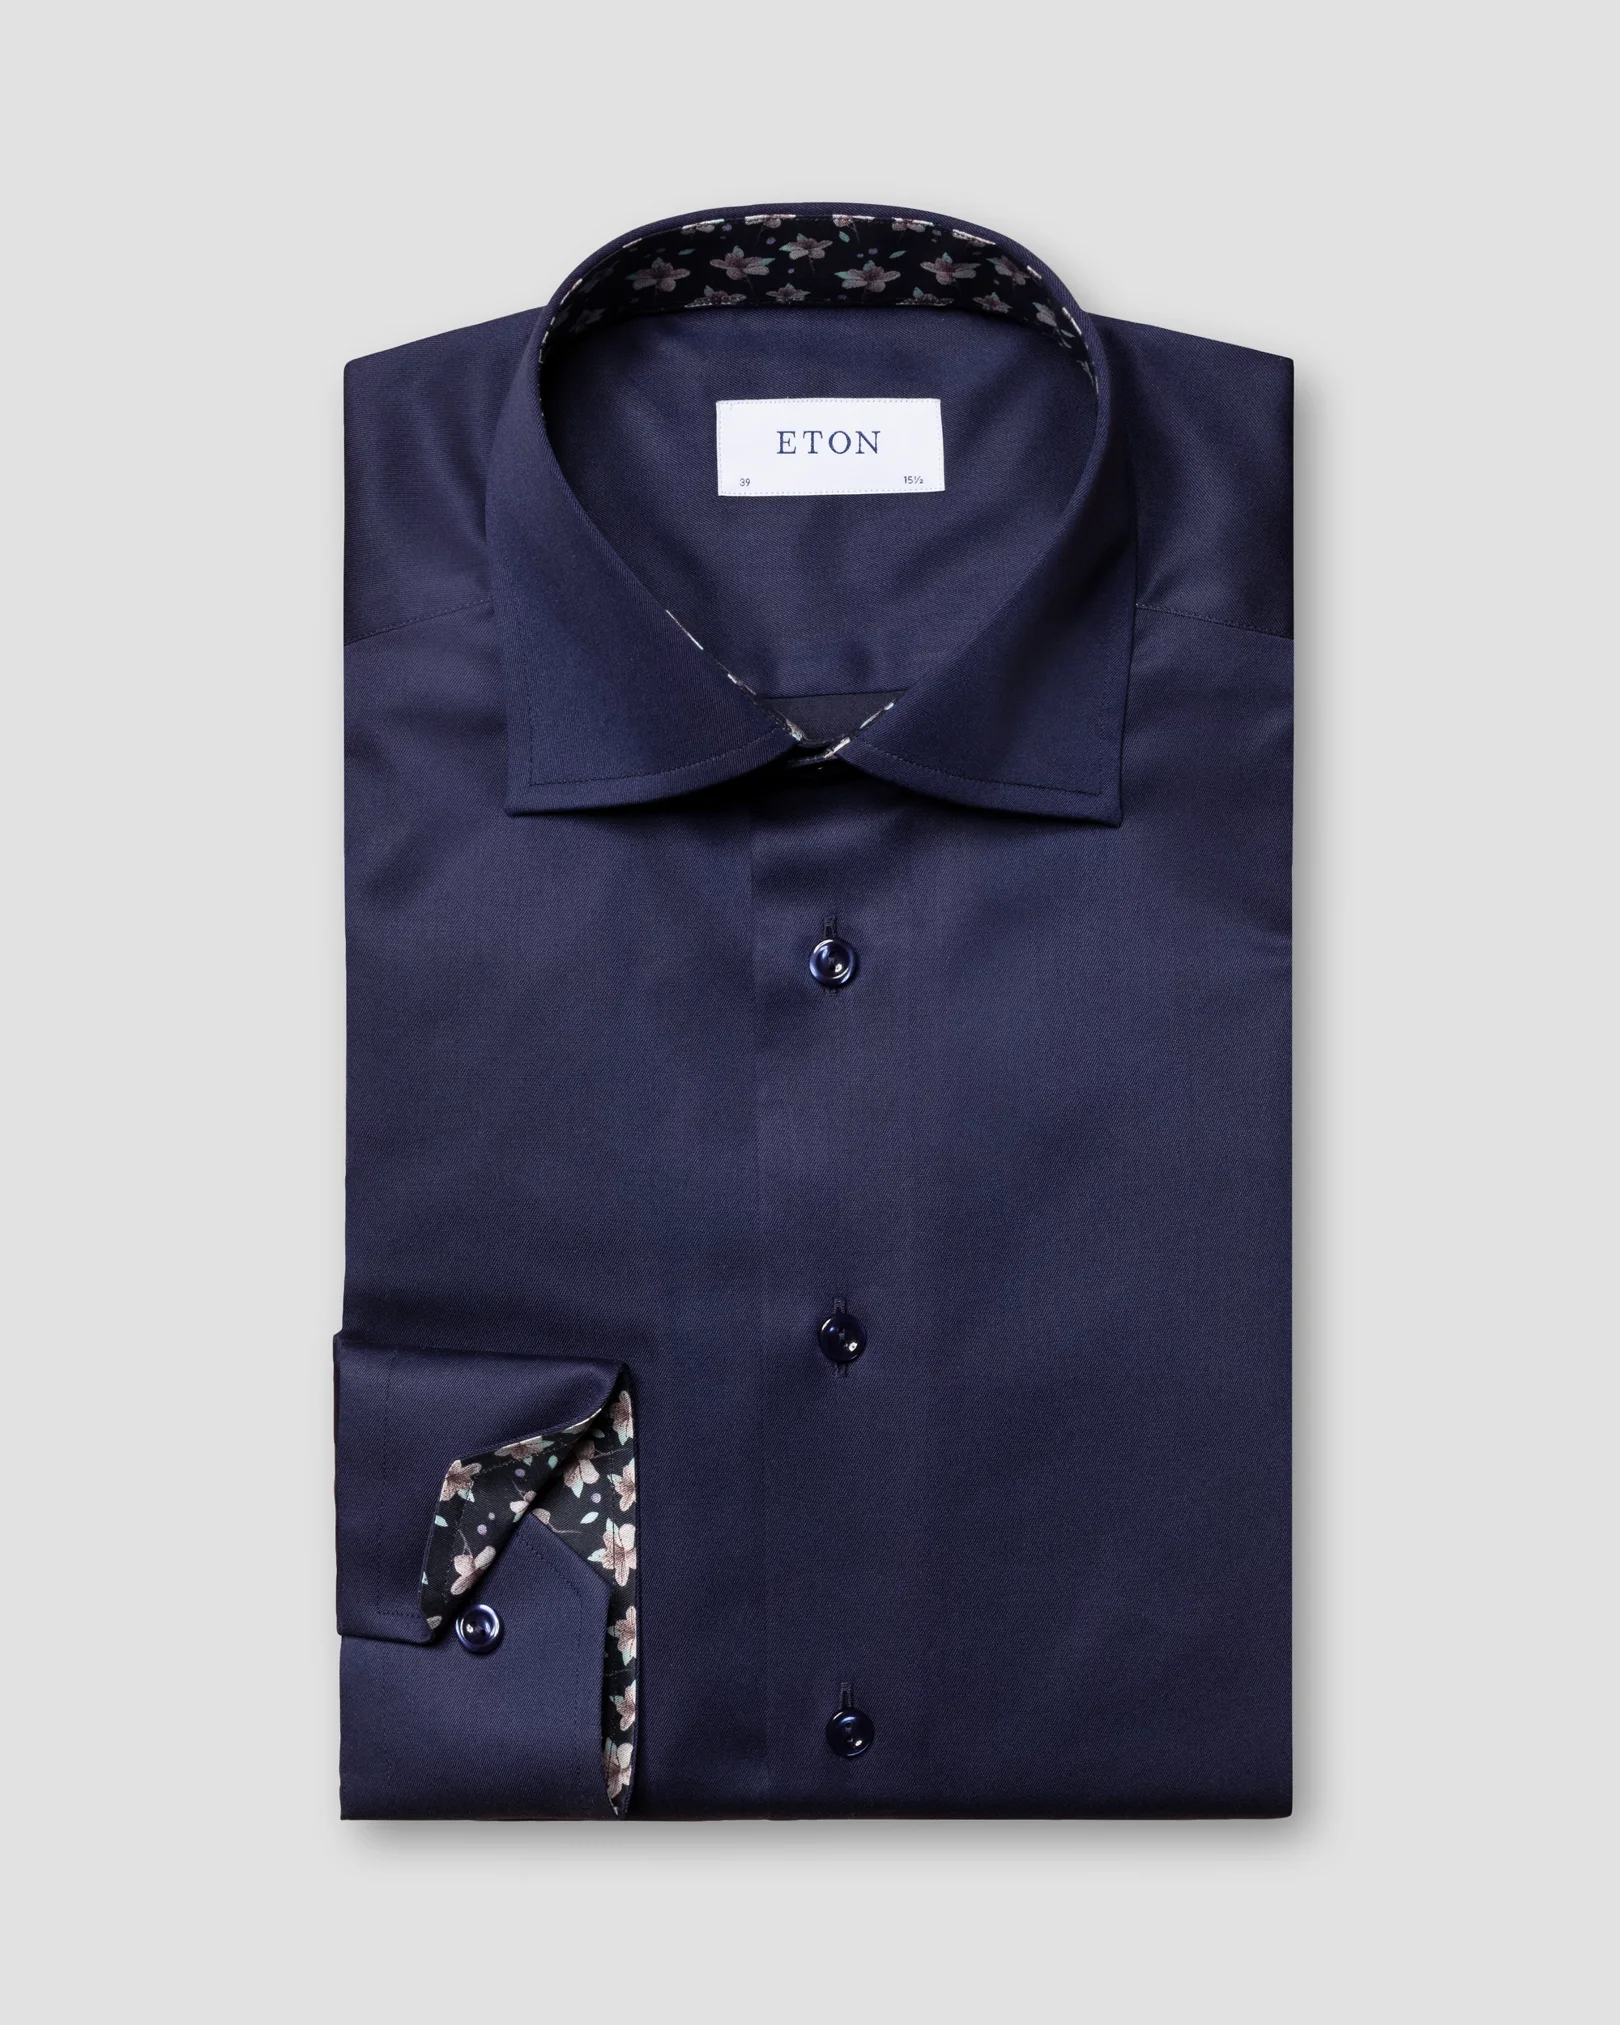 Navy Signature Twill Shirt - Floral Contrast Details - Eton